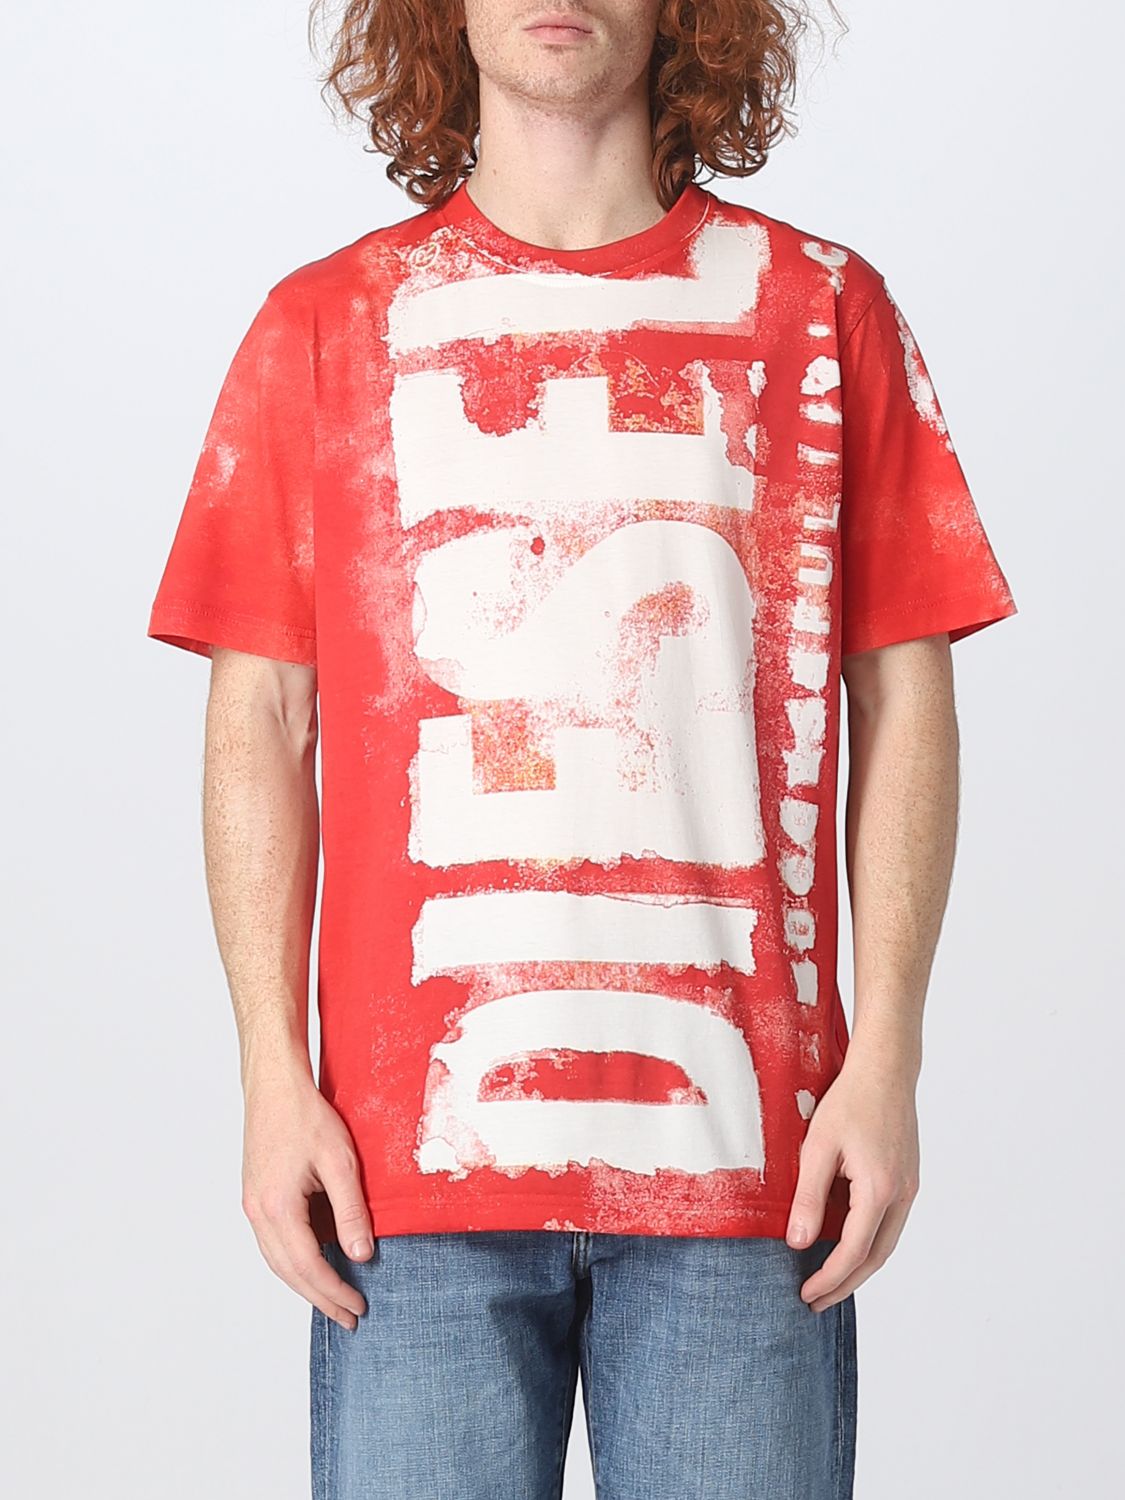 DIESEL: t-shirt for man - Red | Diesel t-shirt online on GIGLIO.COM